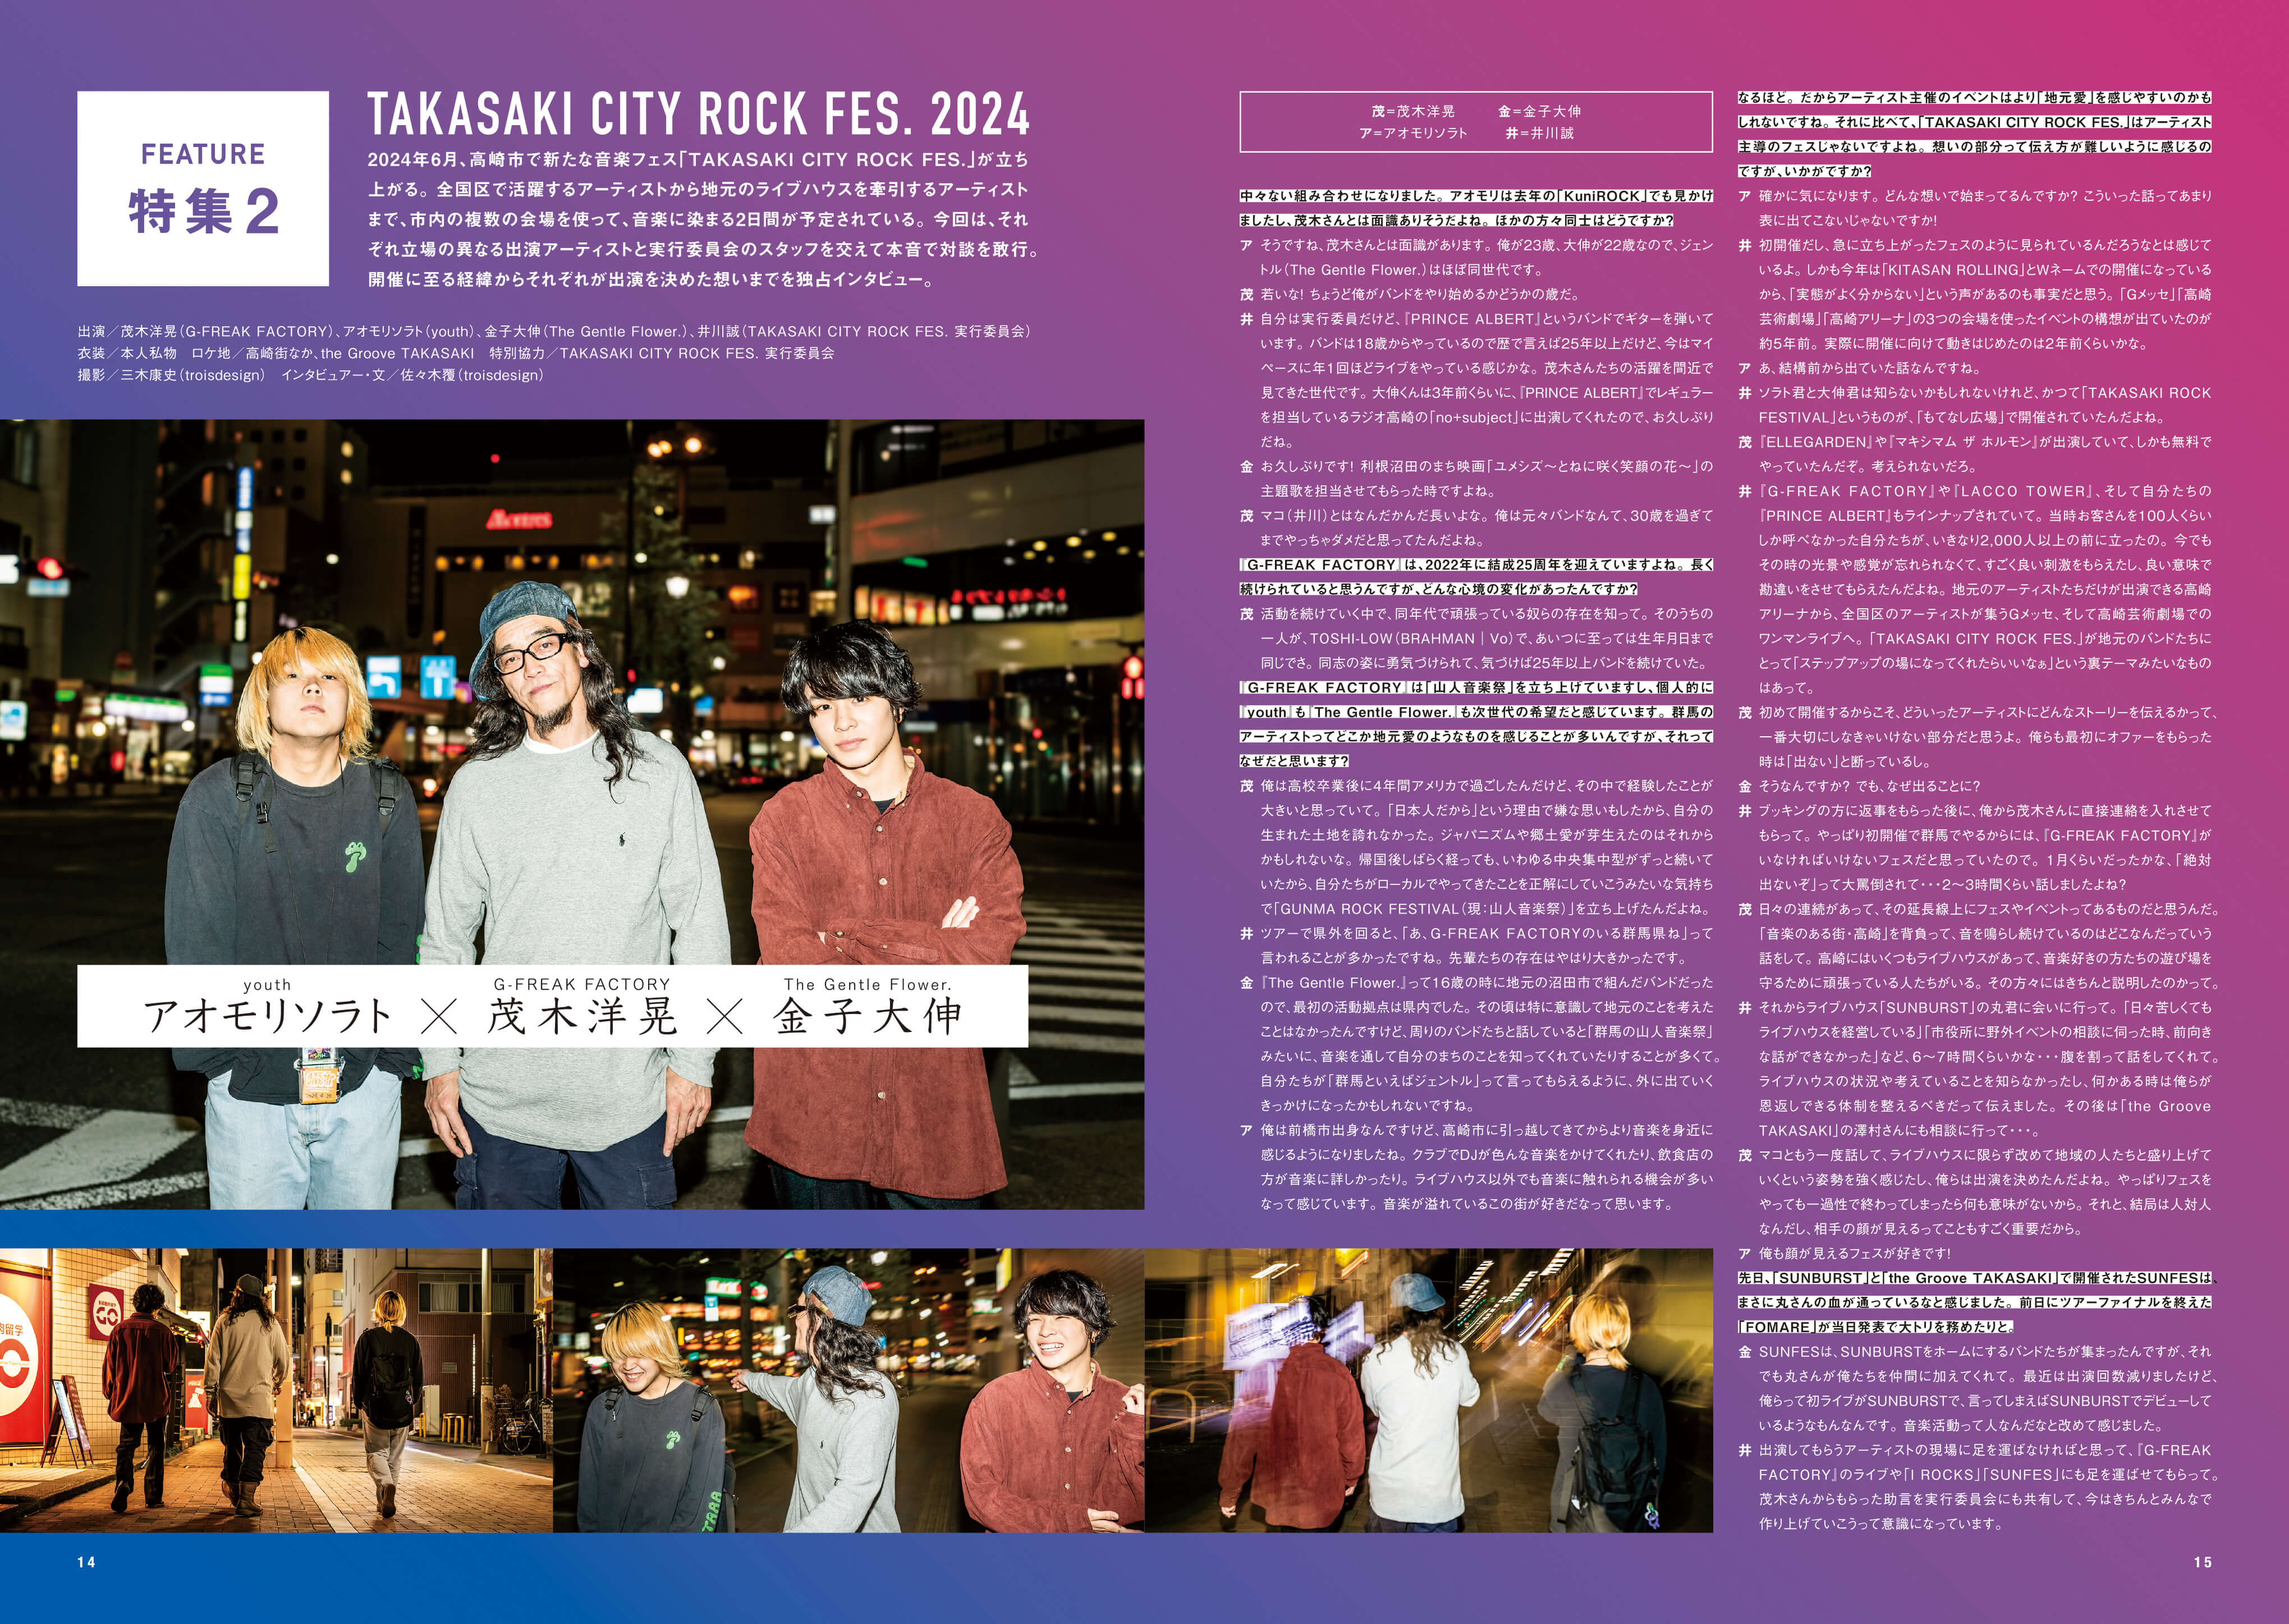 特集2「TAKASAKI CITY ROCK FES. 2024」